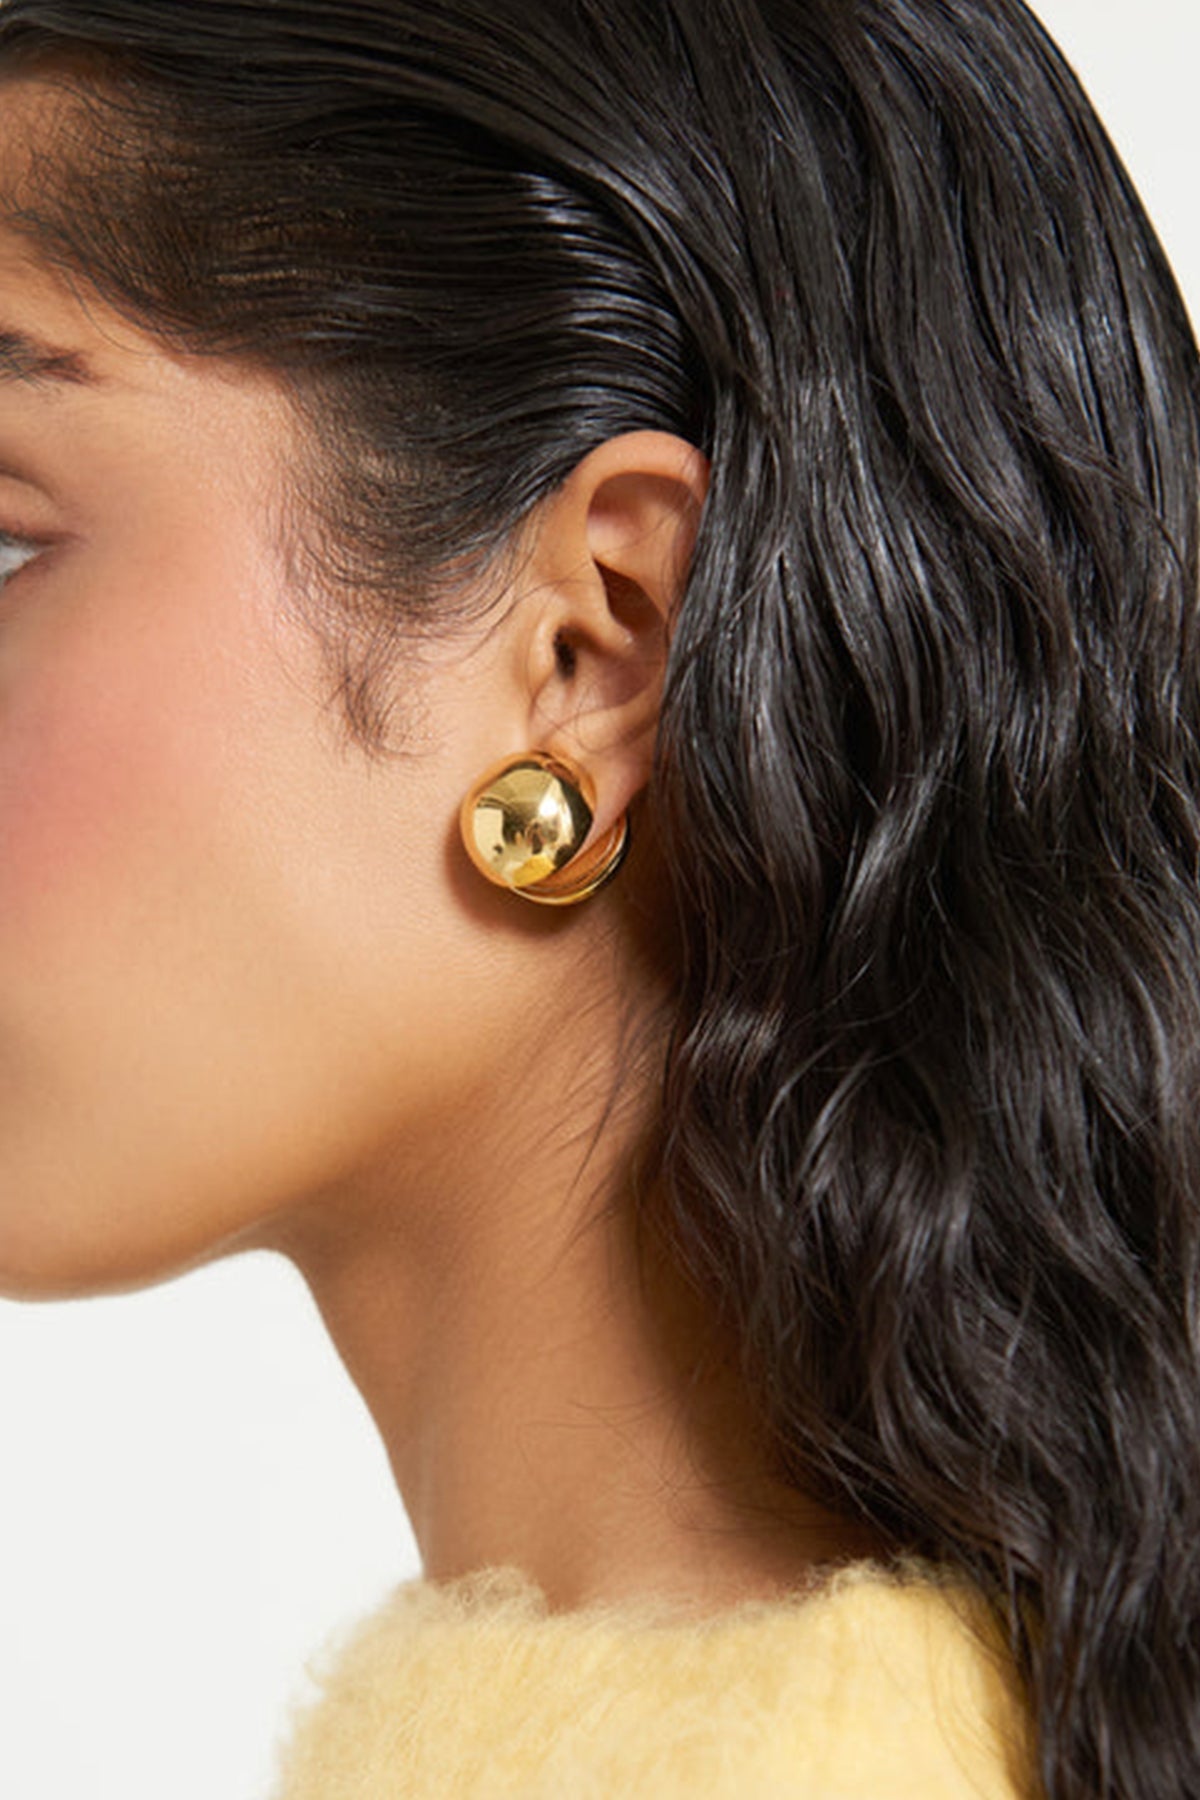 Urbi Earring in Gold - shop-olivia.com